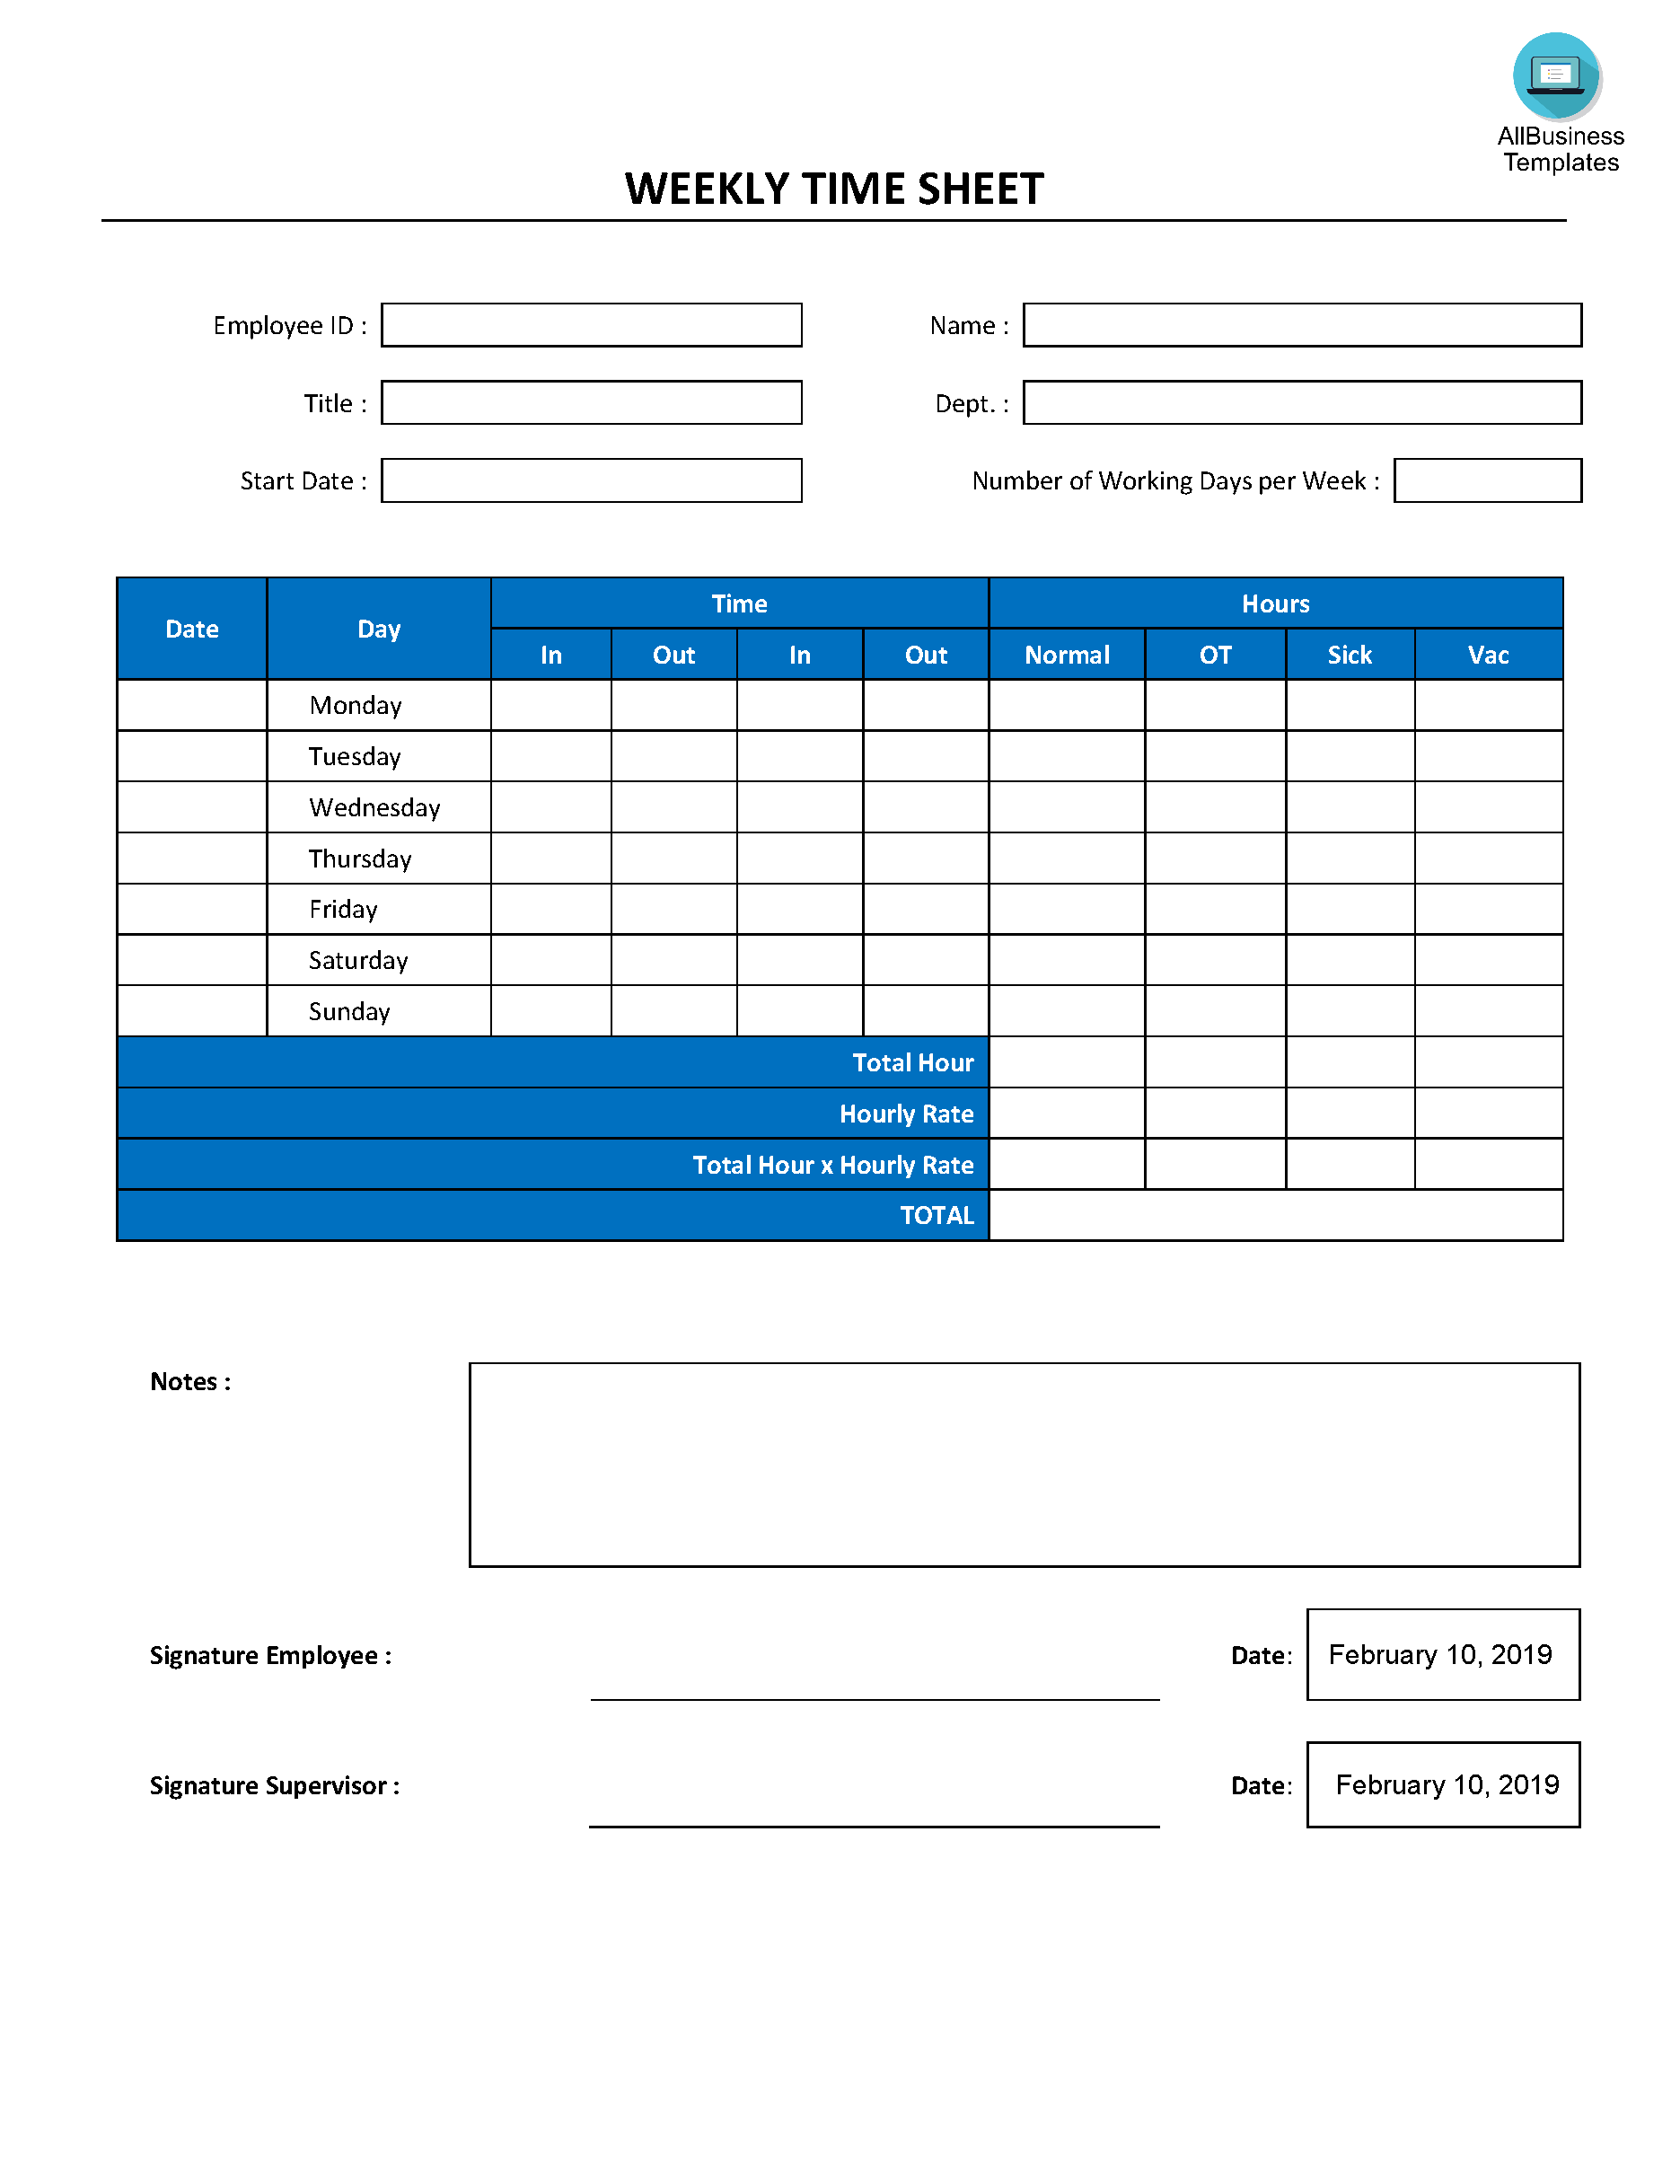 weekly time sheet registration form plantilla imagen principal